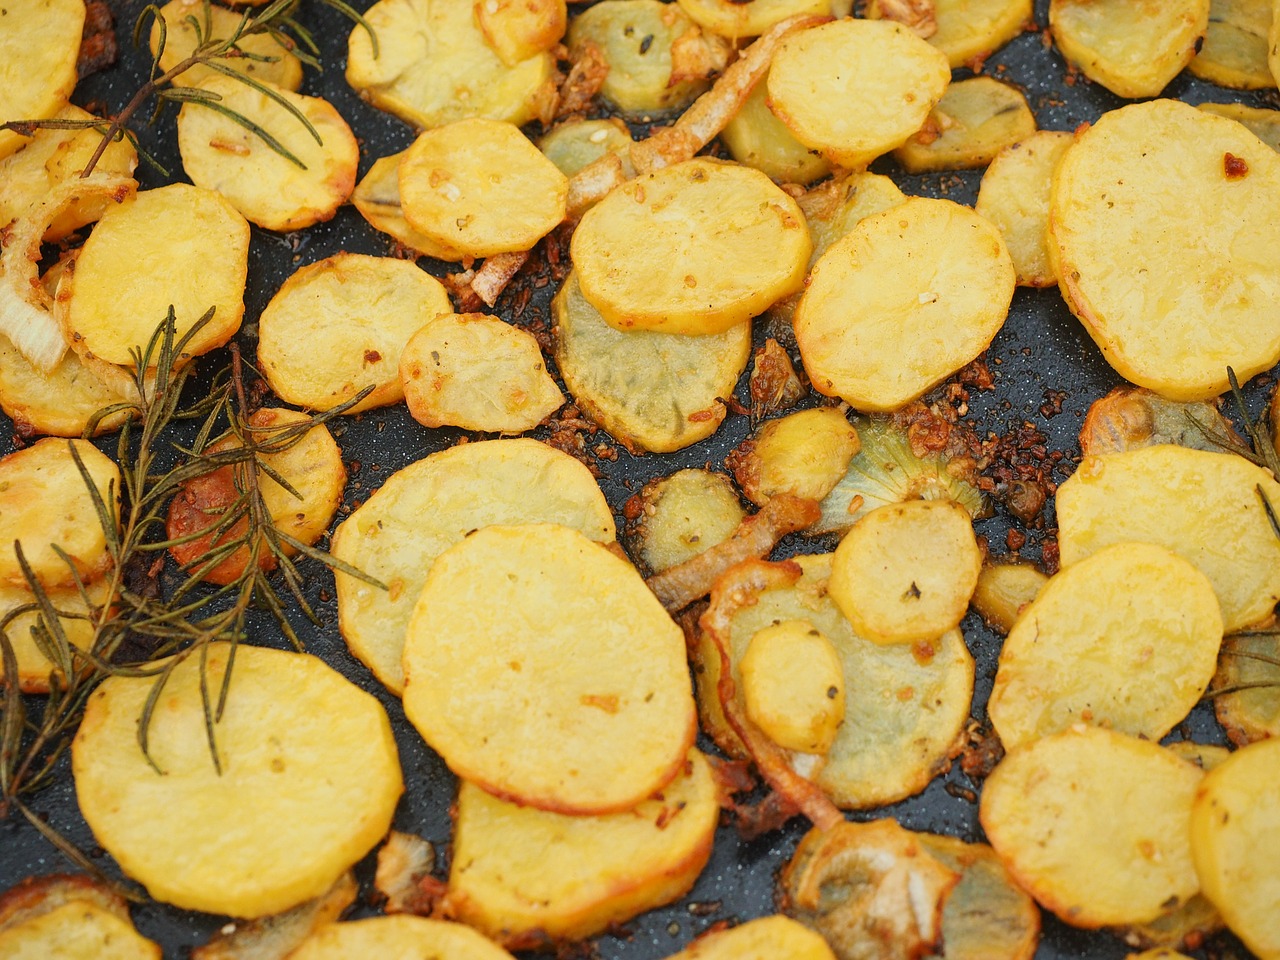 Lemon and Red Onion Roasted Potatoes